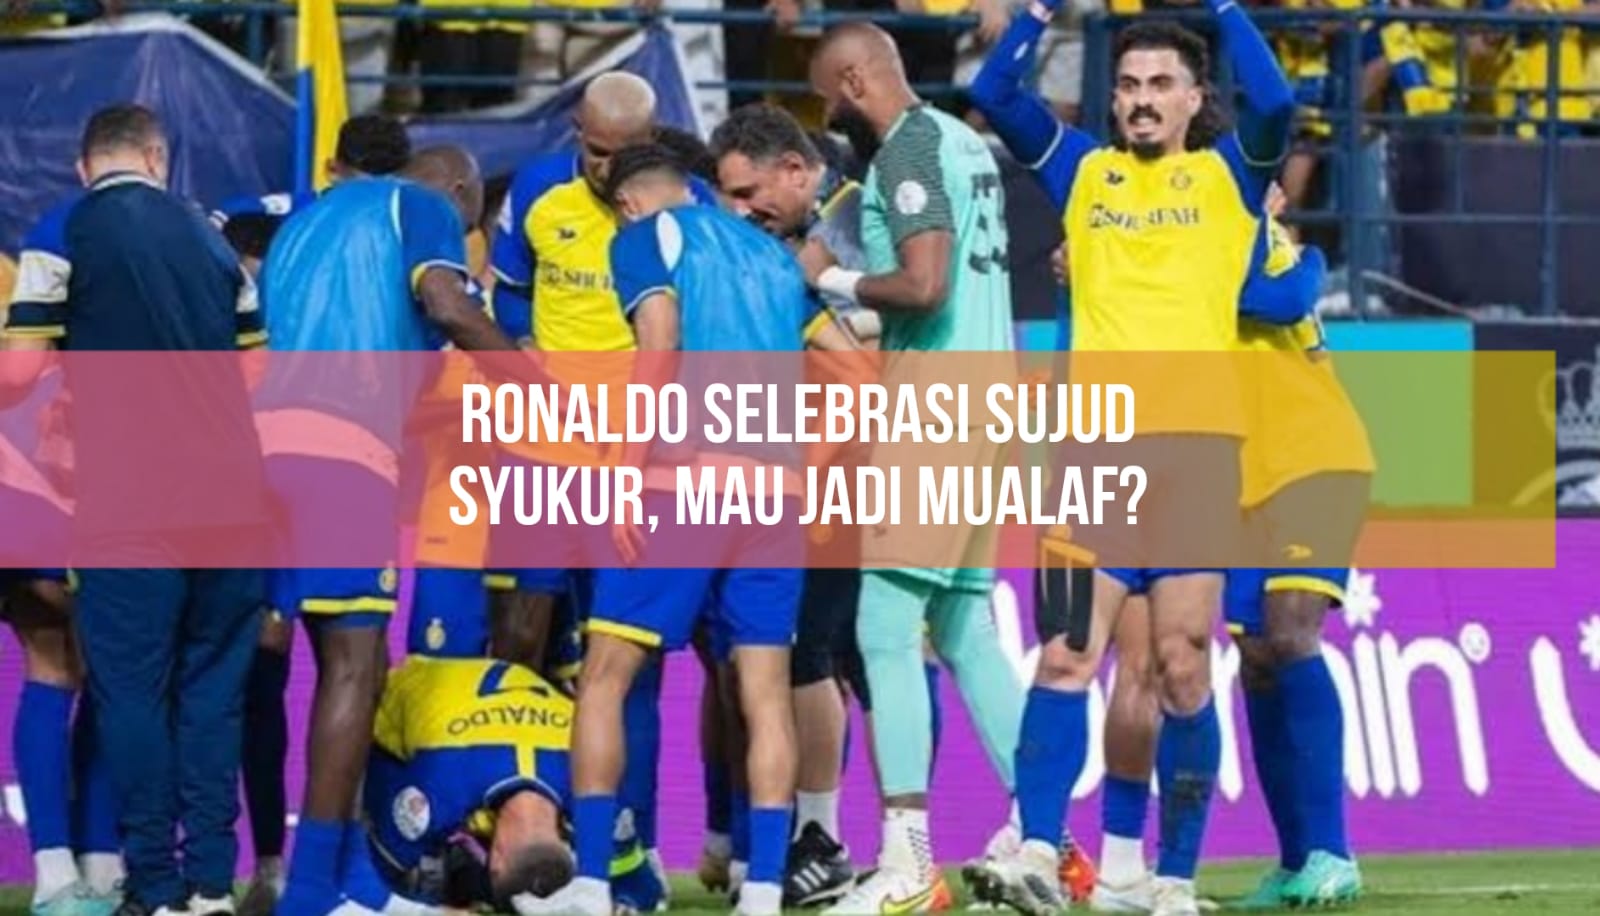 Viral Ronaldo Selebrasi Sujud Syukur Usai Cetak Gol, Bakal Jadi Mualaf?